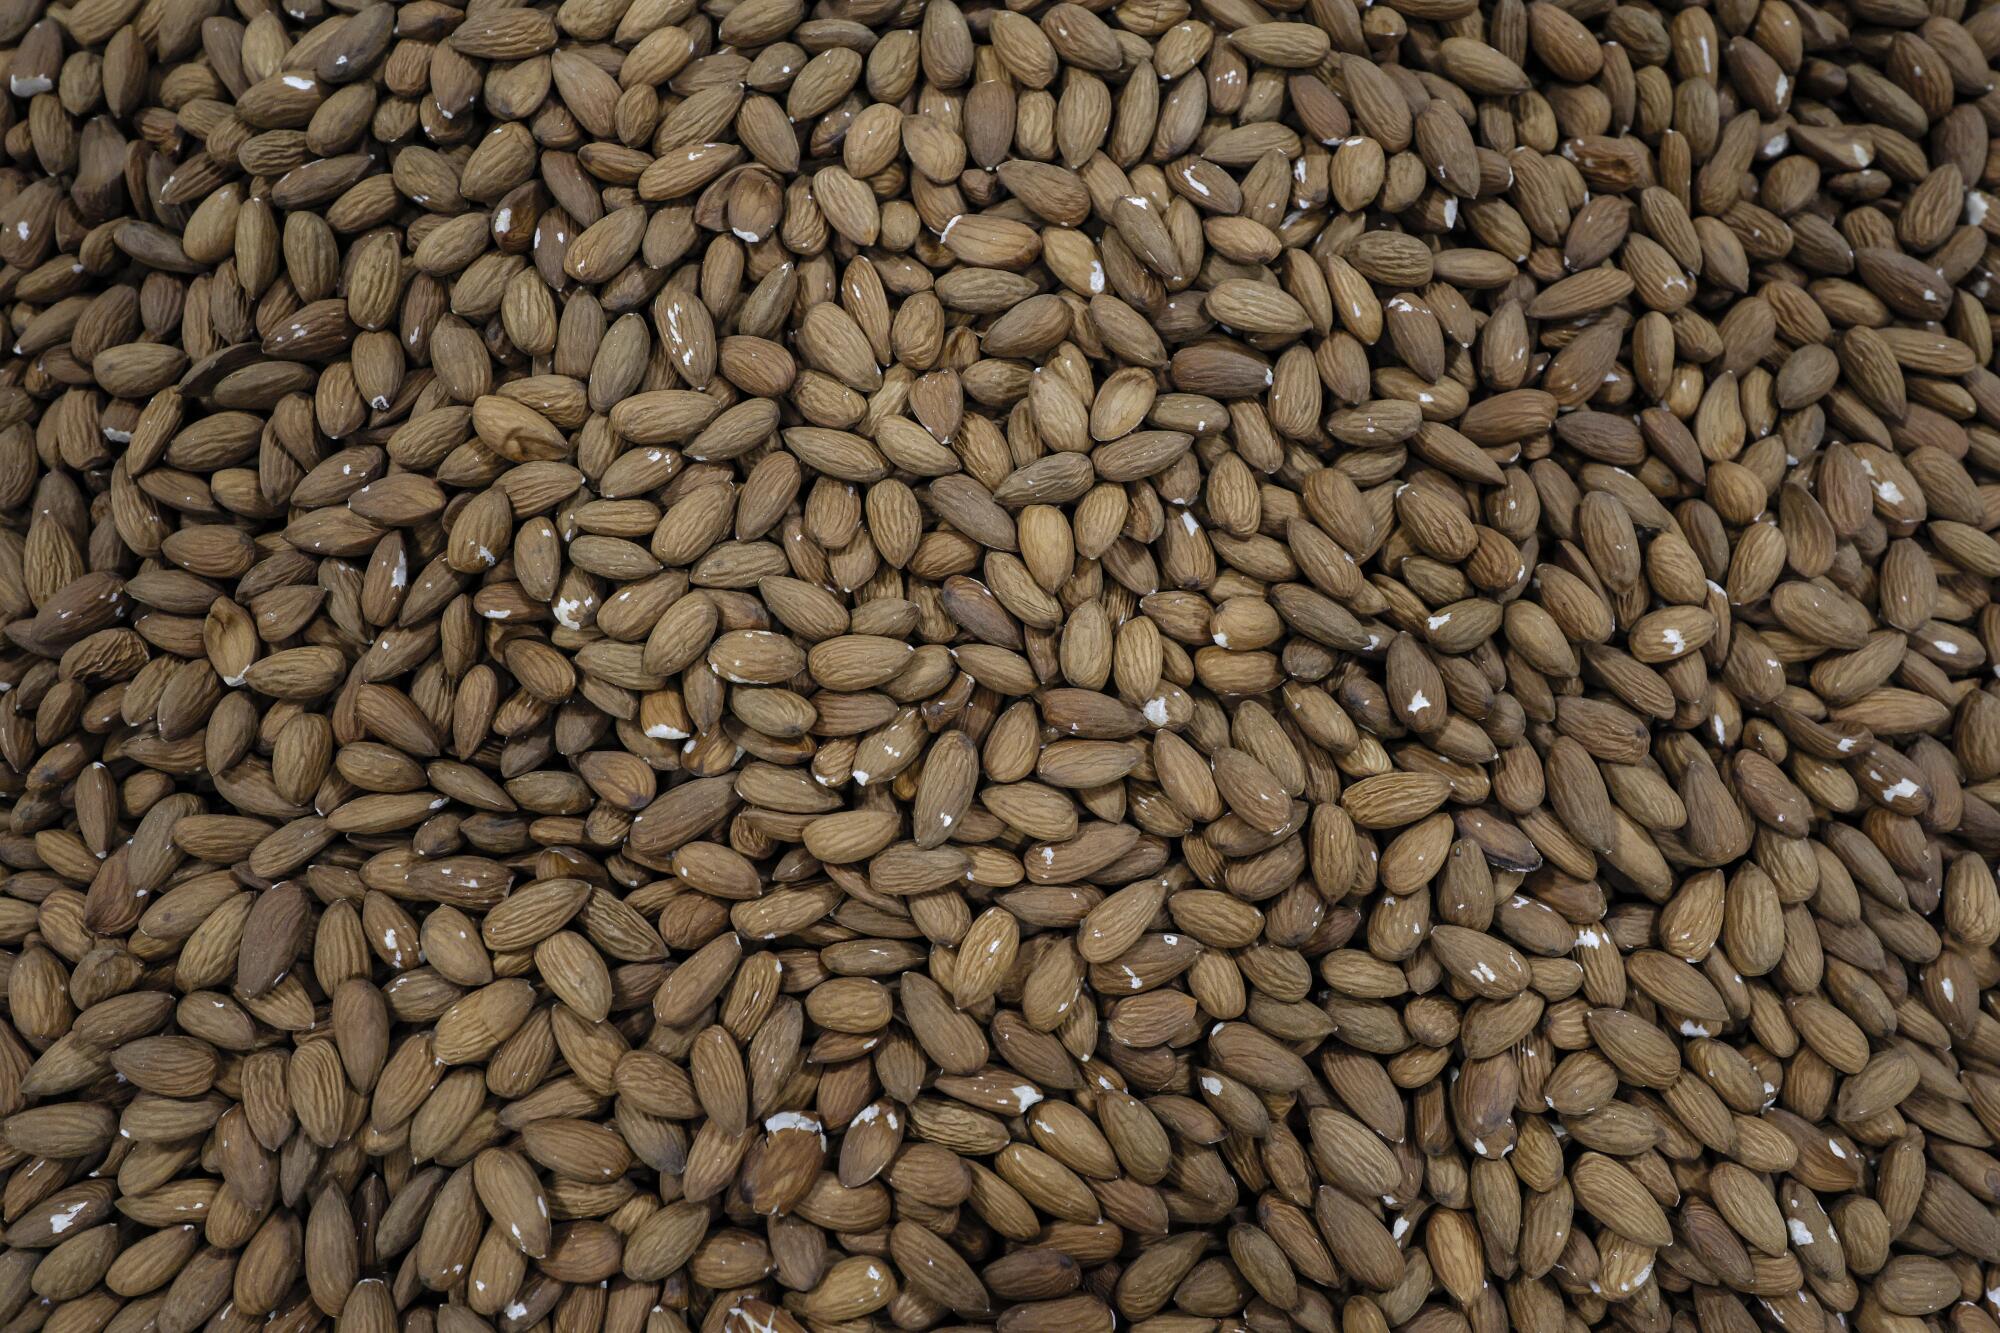 Almonds in a bin at Phippen farm in Manteca.